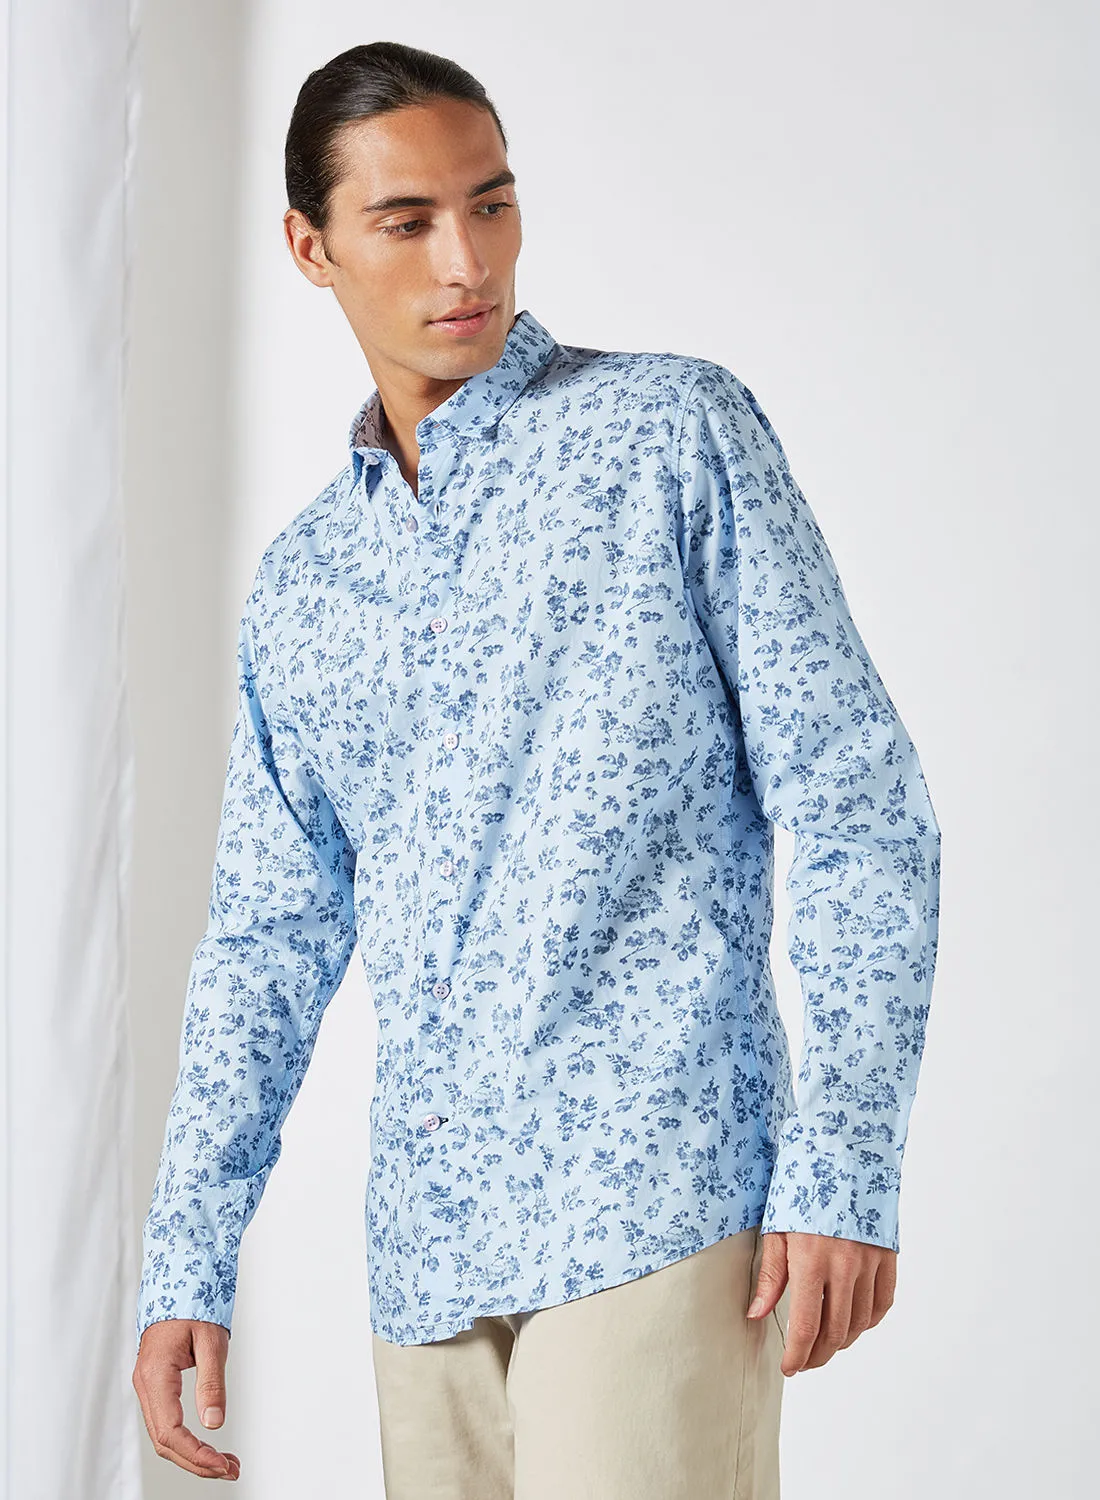 Mast & Harbour Men's Floral Printed Casual Shirt Blue